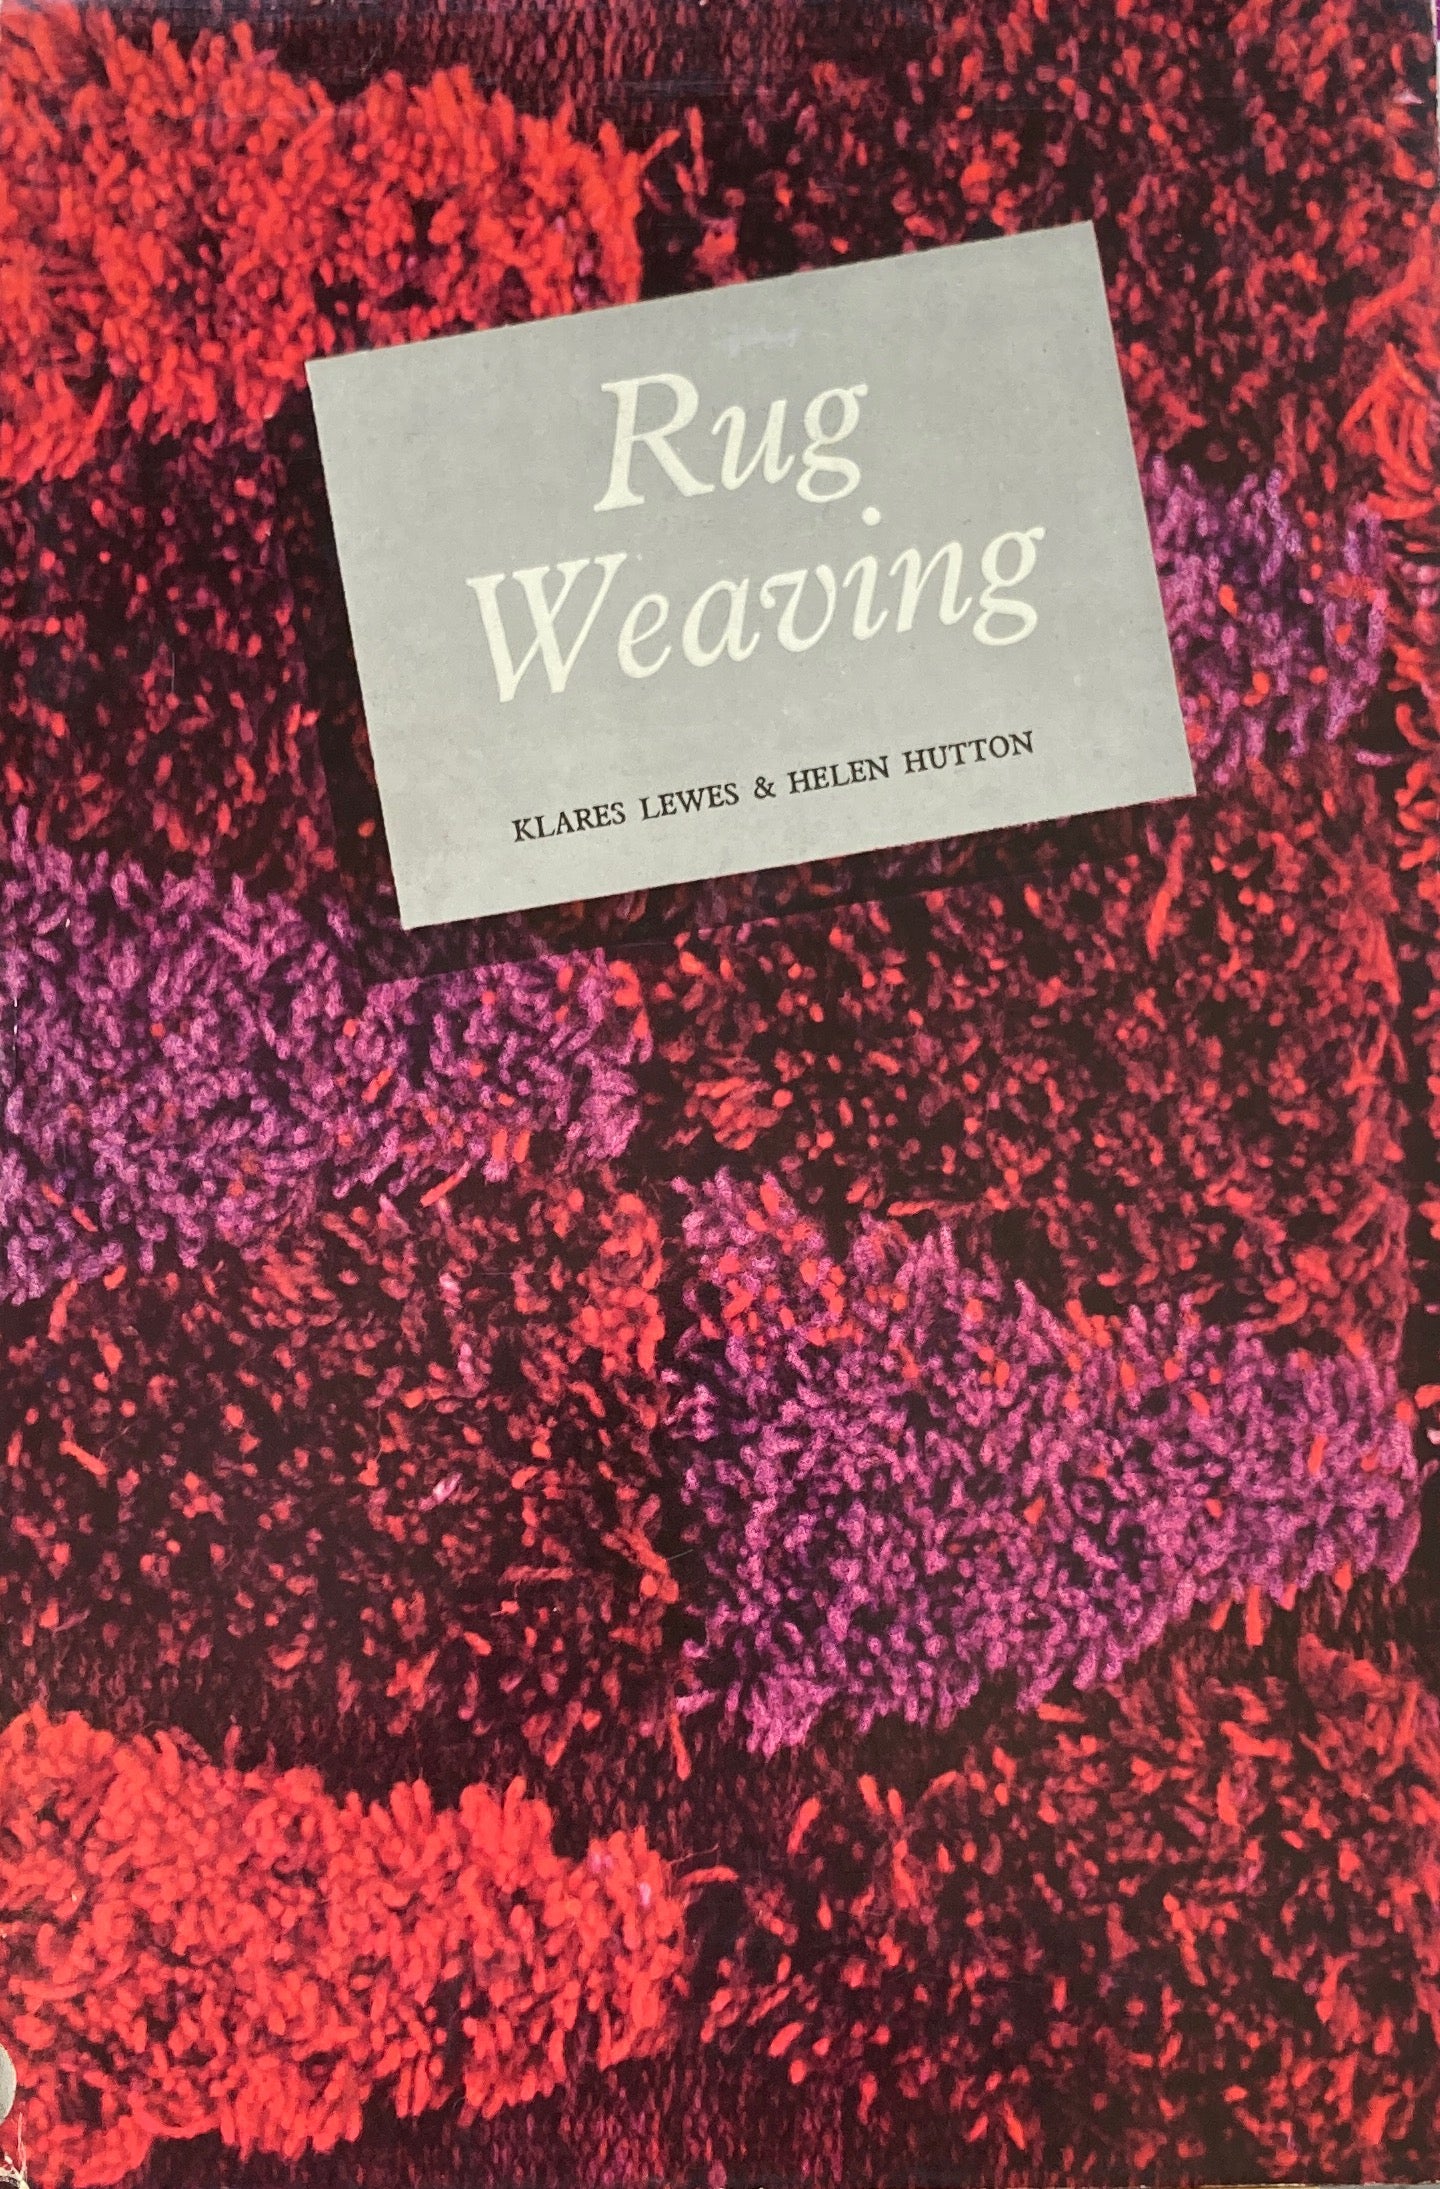 Rug Weaving Klares Lewis & Helen Hutton　